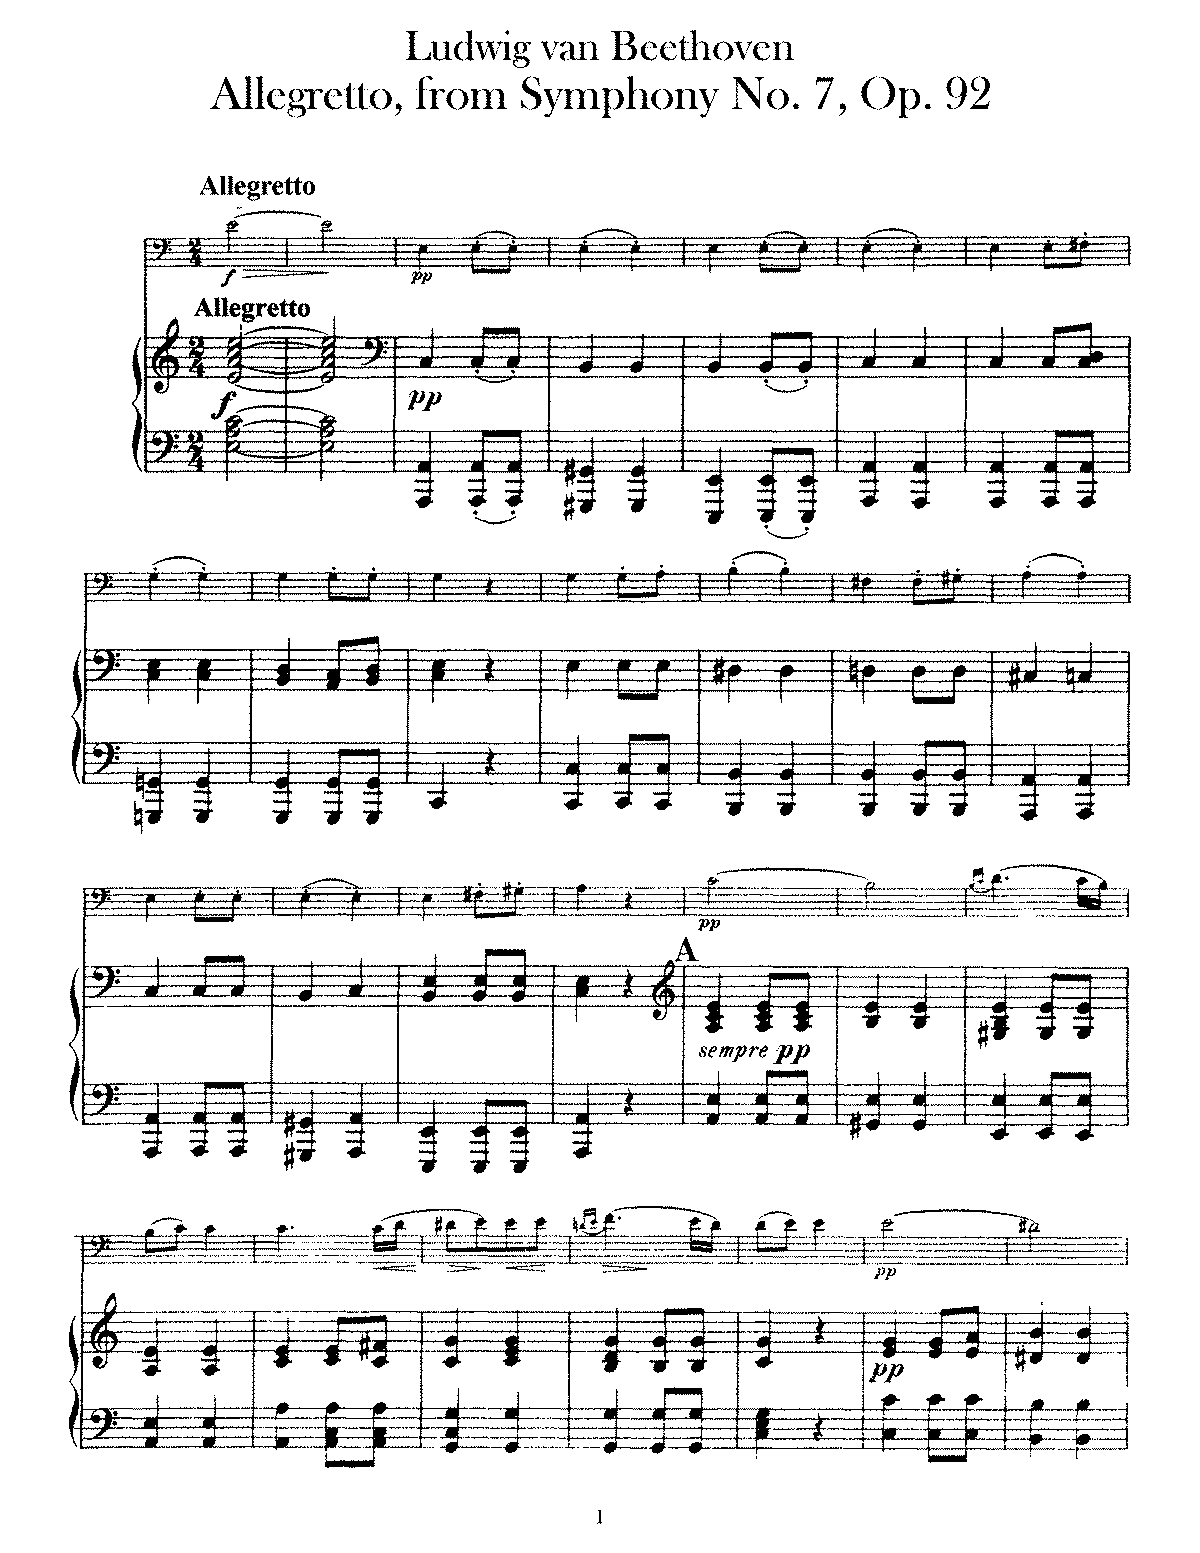 File:PMLP01600-Beethoven - Allegretto from Sym No7 Op92 for cello piano.pdf...